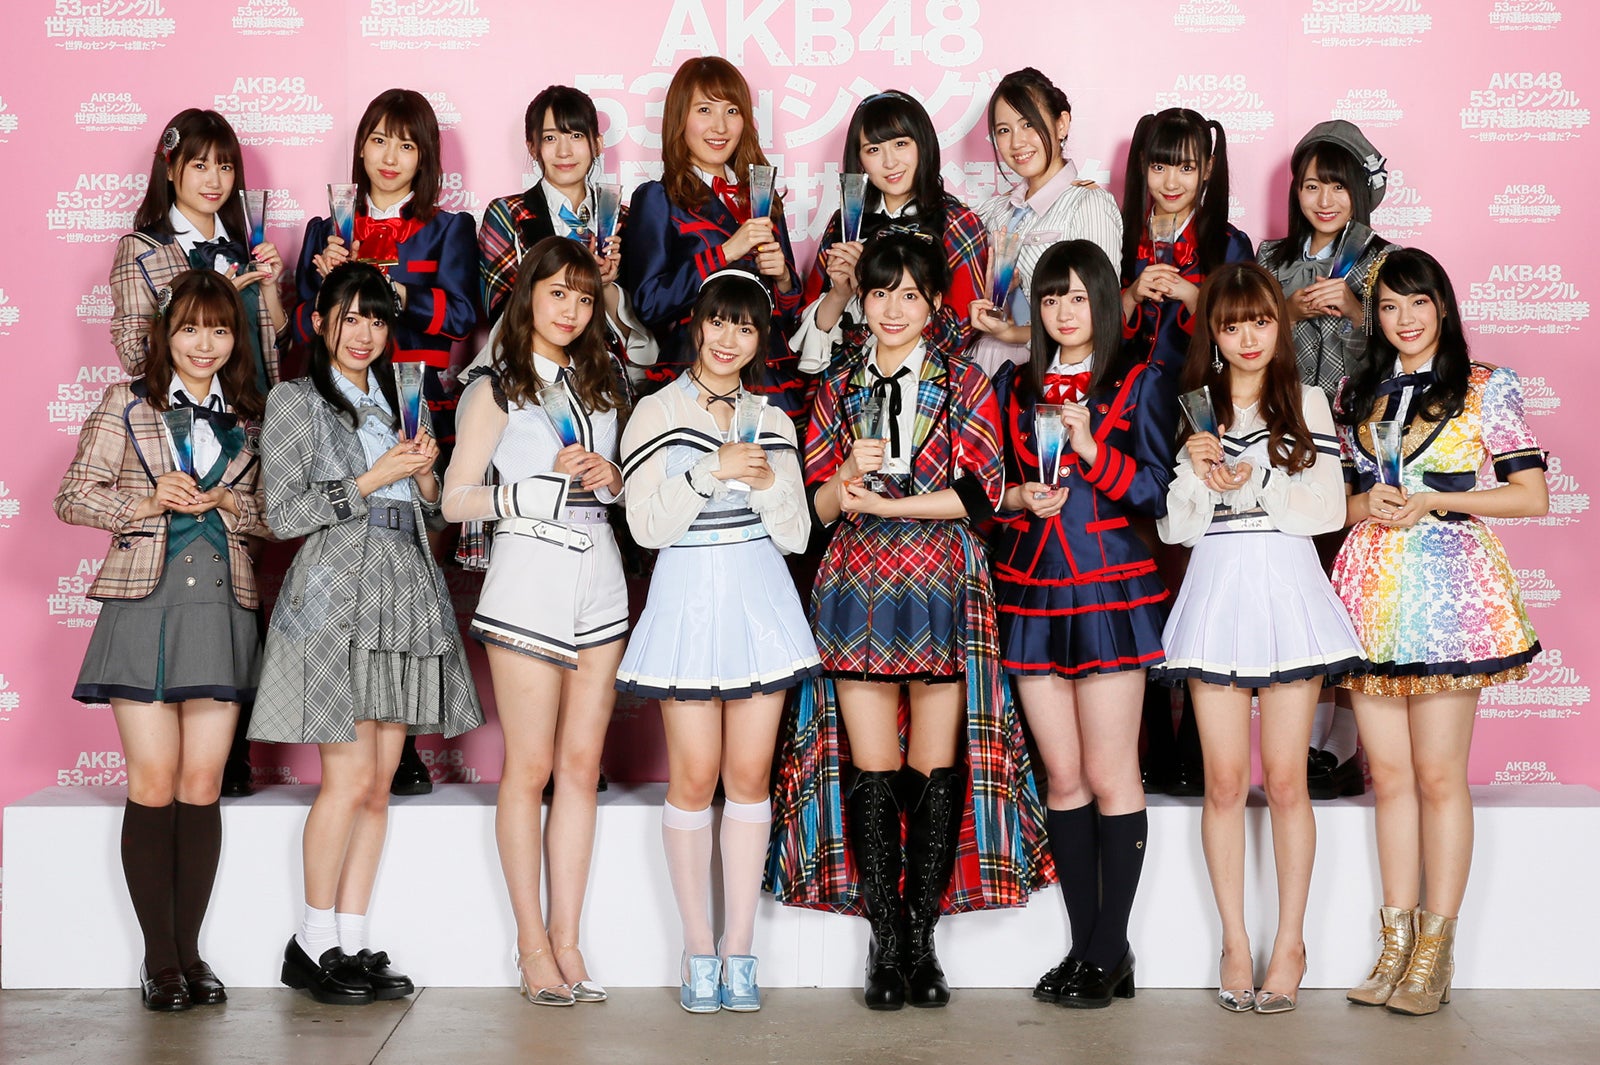 AKB48 53rd選抜総選挙 投票券35枚